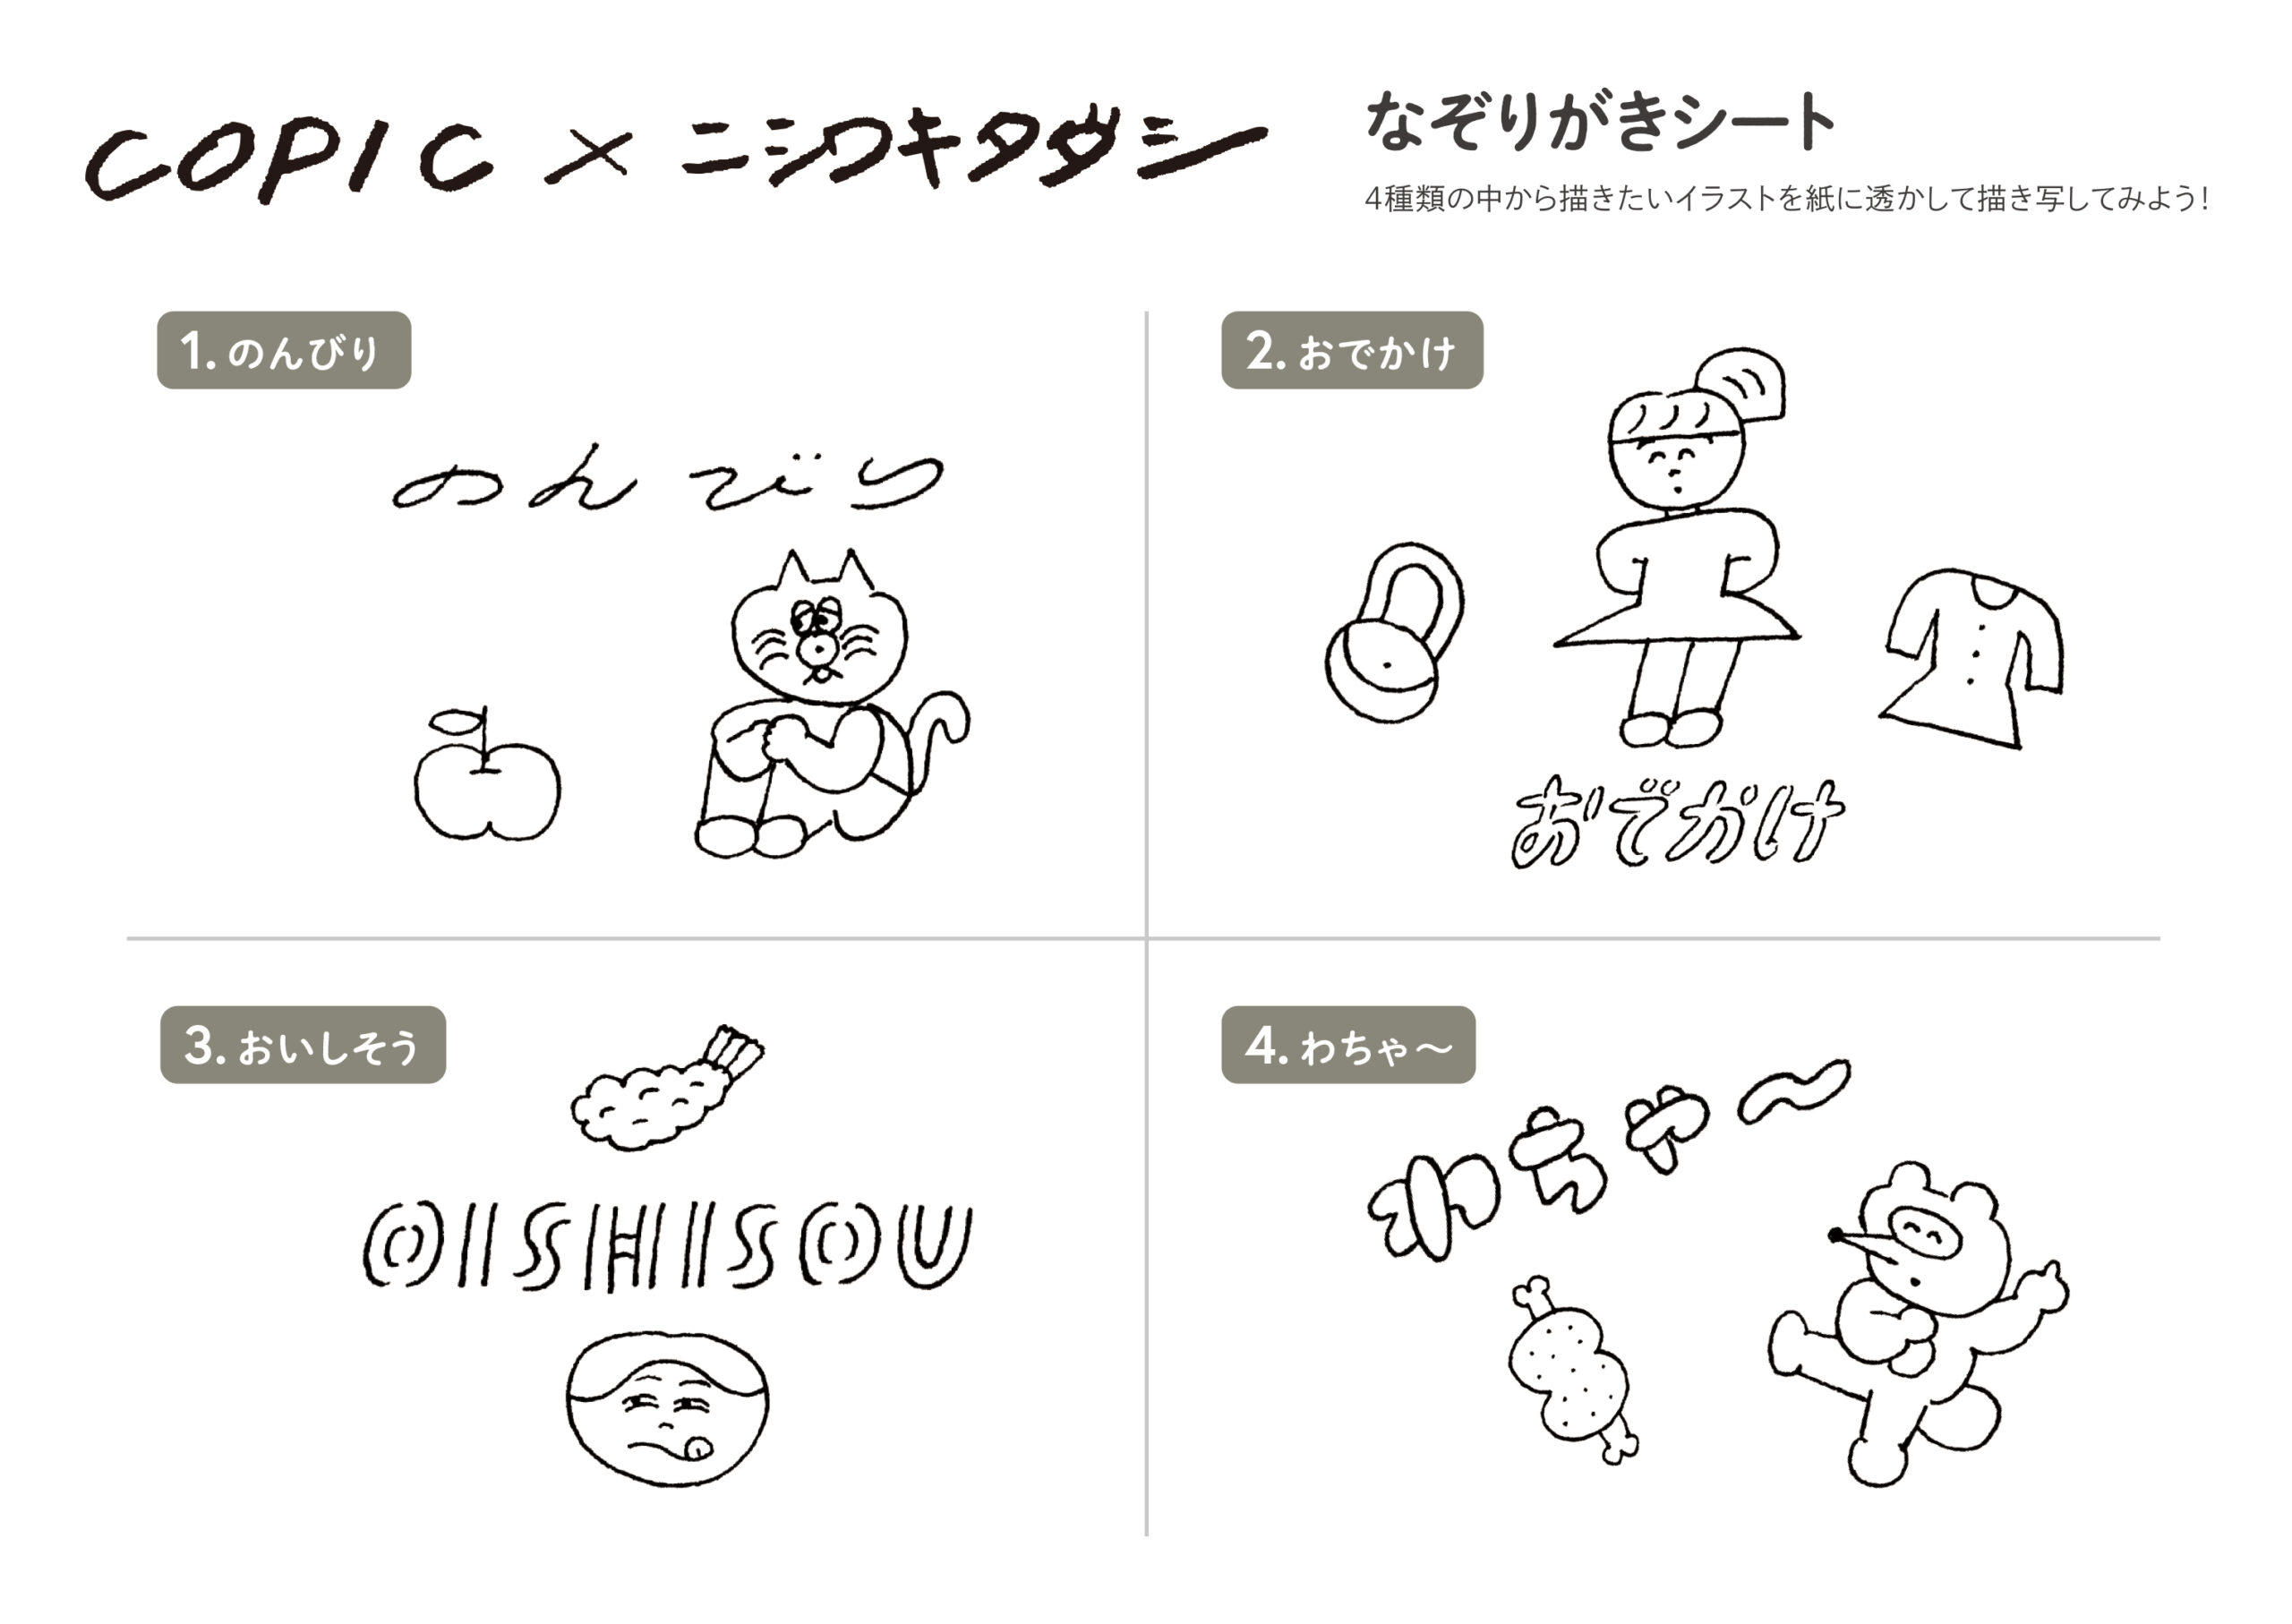 Tadashi Nishiwaki Copic Official Website